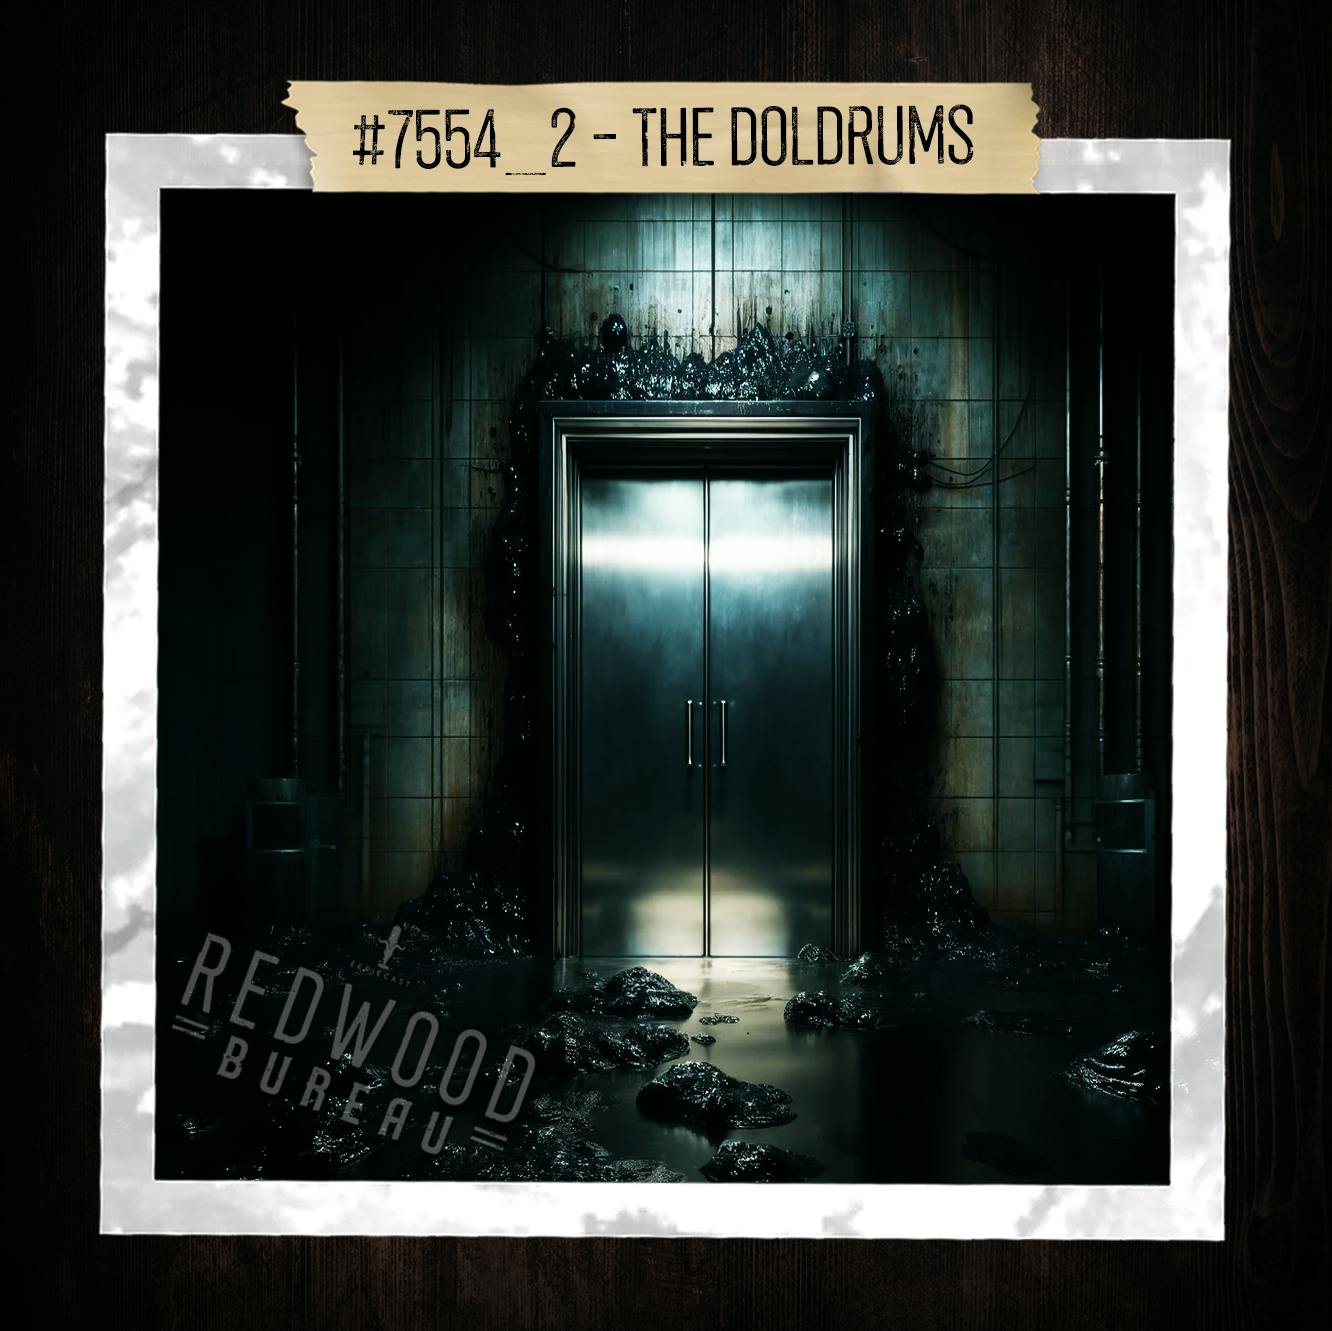 ”THE DOLDRUMS” - Redwood Bureau Phenomenon #7554_2